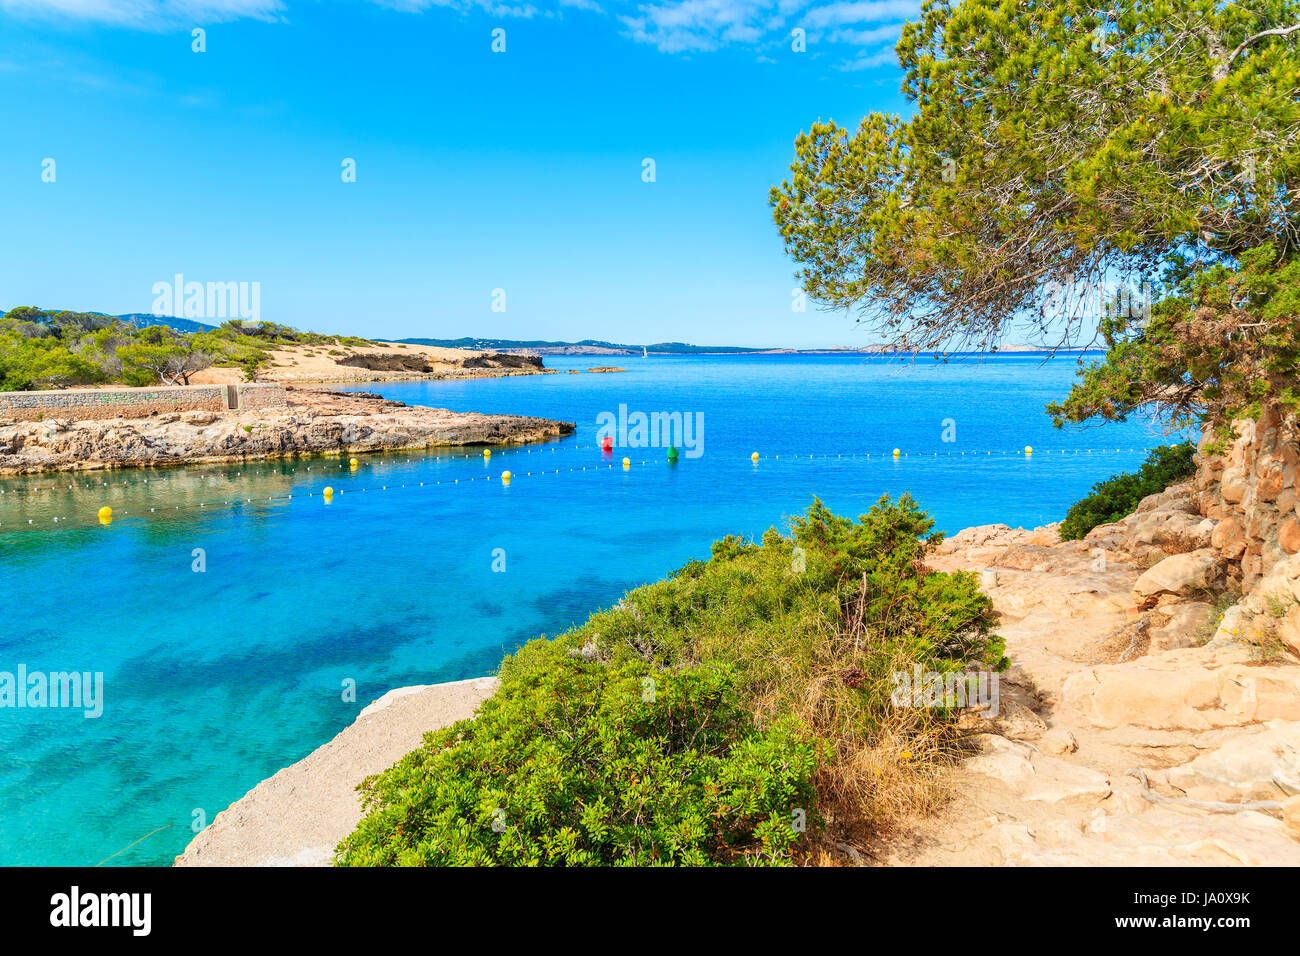 View of coastal path along beautiful Cala Gracio bay at early morning, Ibiza island, Spain Stock Photo